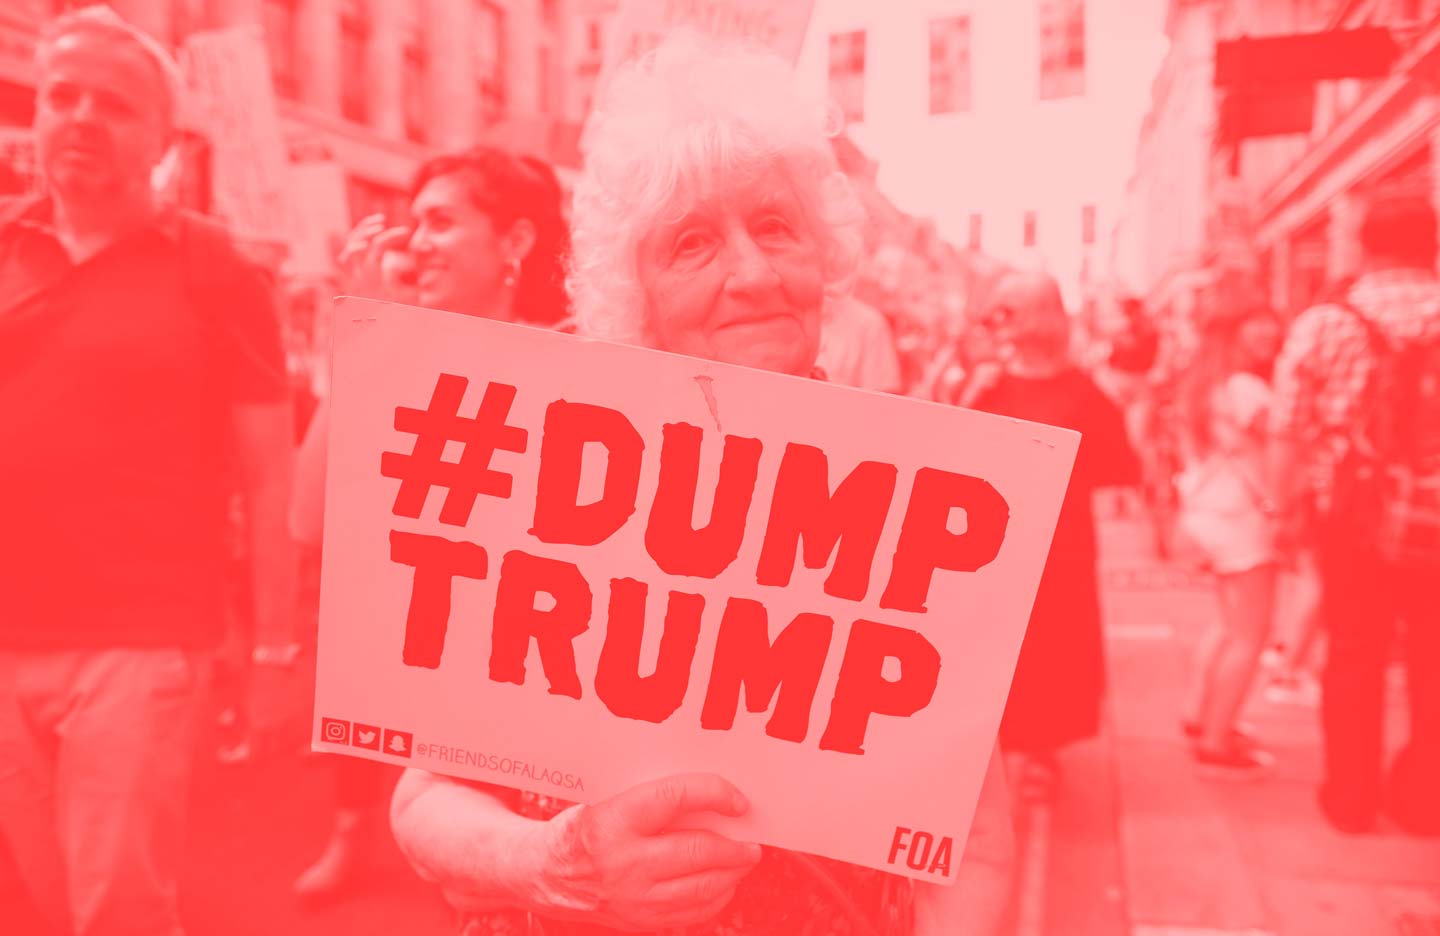 Photography by Alisdare Hickson — #DumpTrump, London.